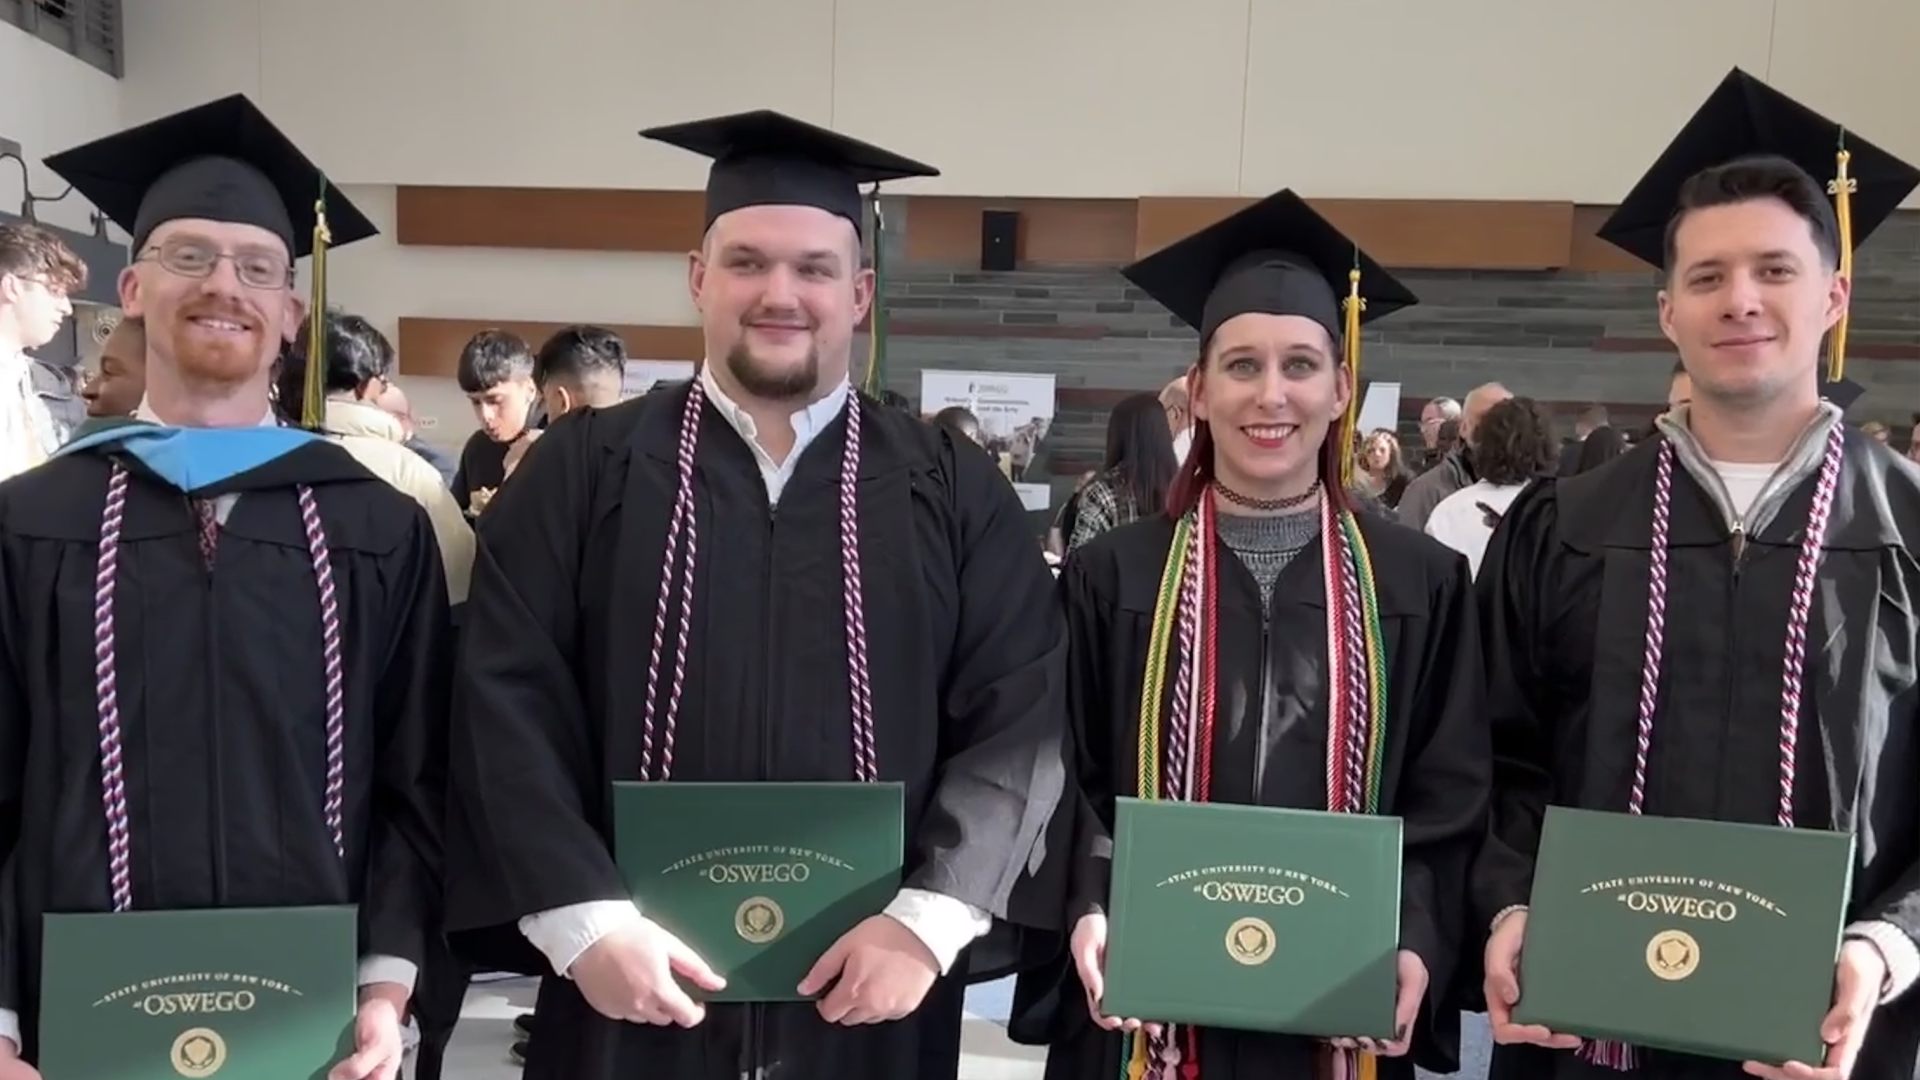 Four graduates dressed in commencing regalia, holding their diplomas